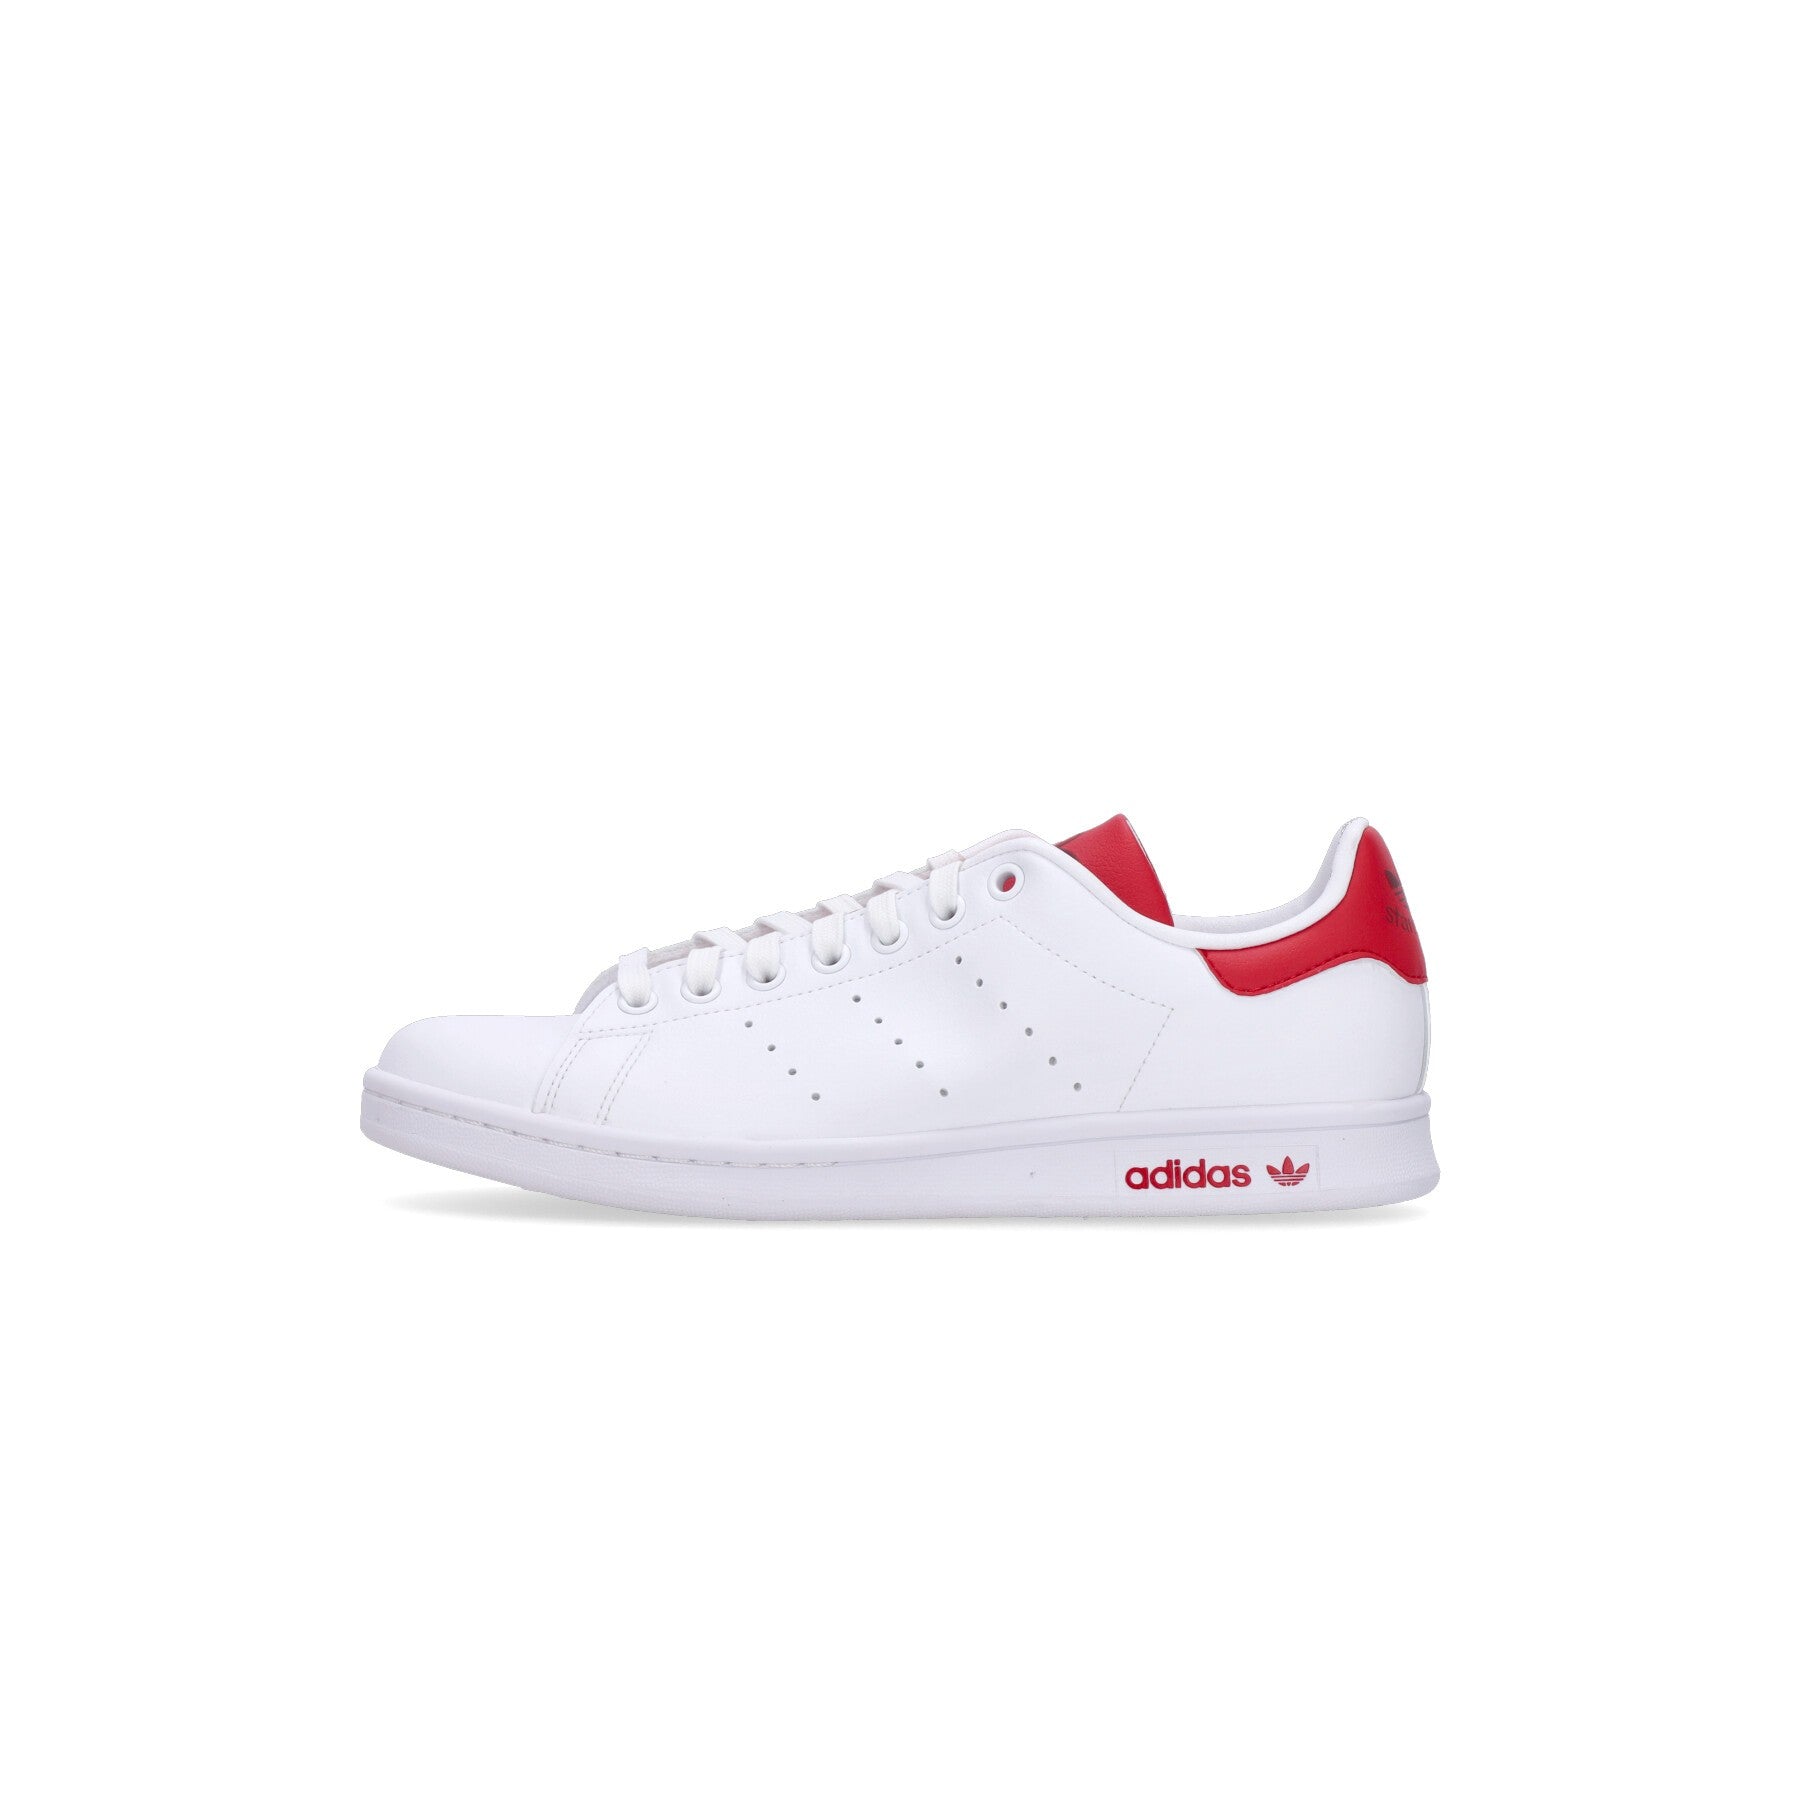 Adidas, Scarpa Bassa Uomo Stan Smith, Footwear White/footwear White/scarlet